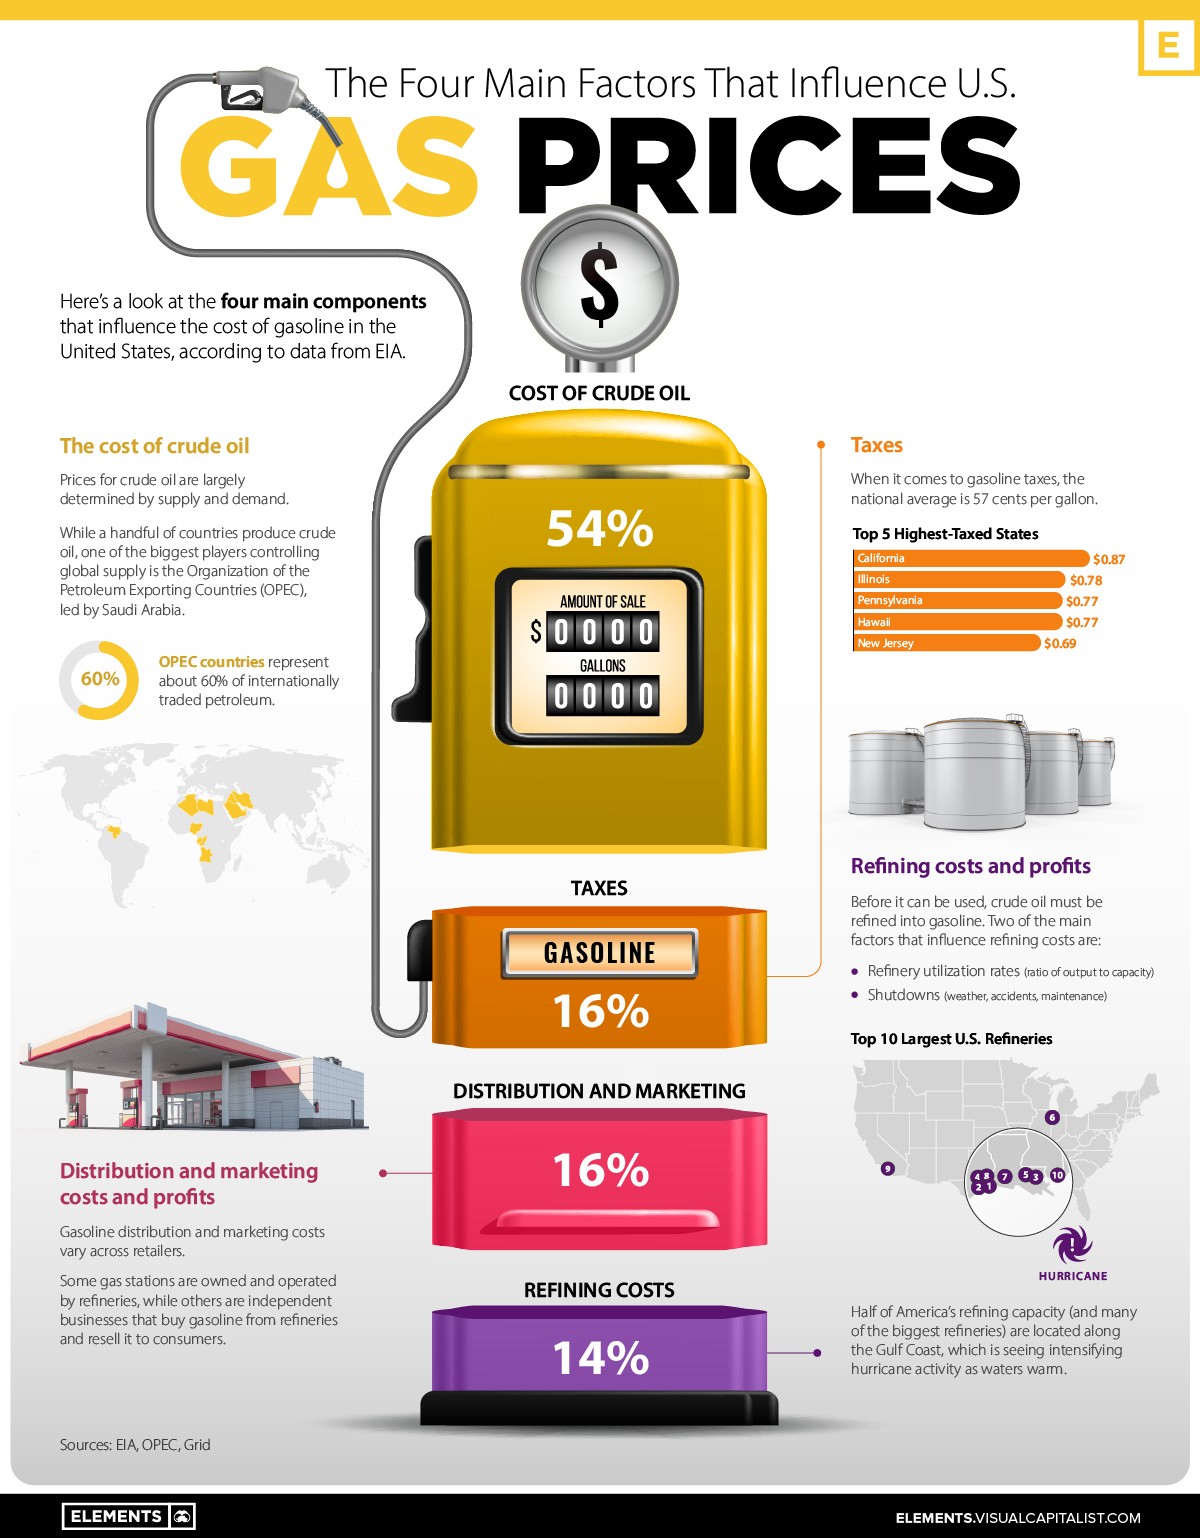 https://elements.visualcapitalist.com/wp-content/uploads/2022/06/The-Four-Main-Factors-that-Influence-U.S.-Gas-Prices_v5-1.jpg